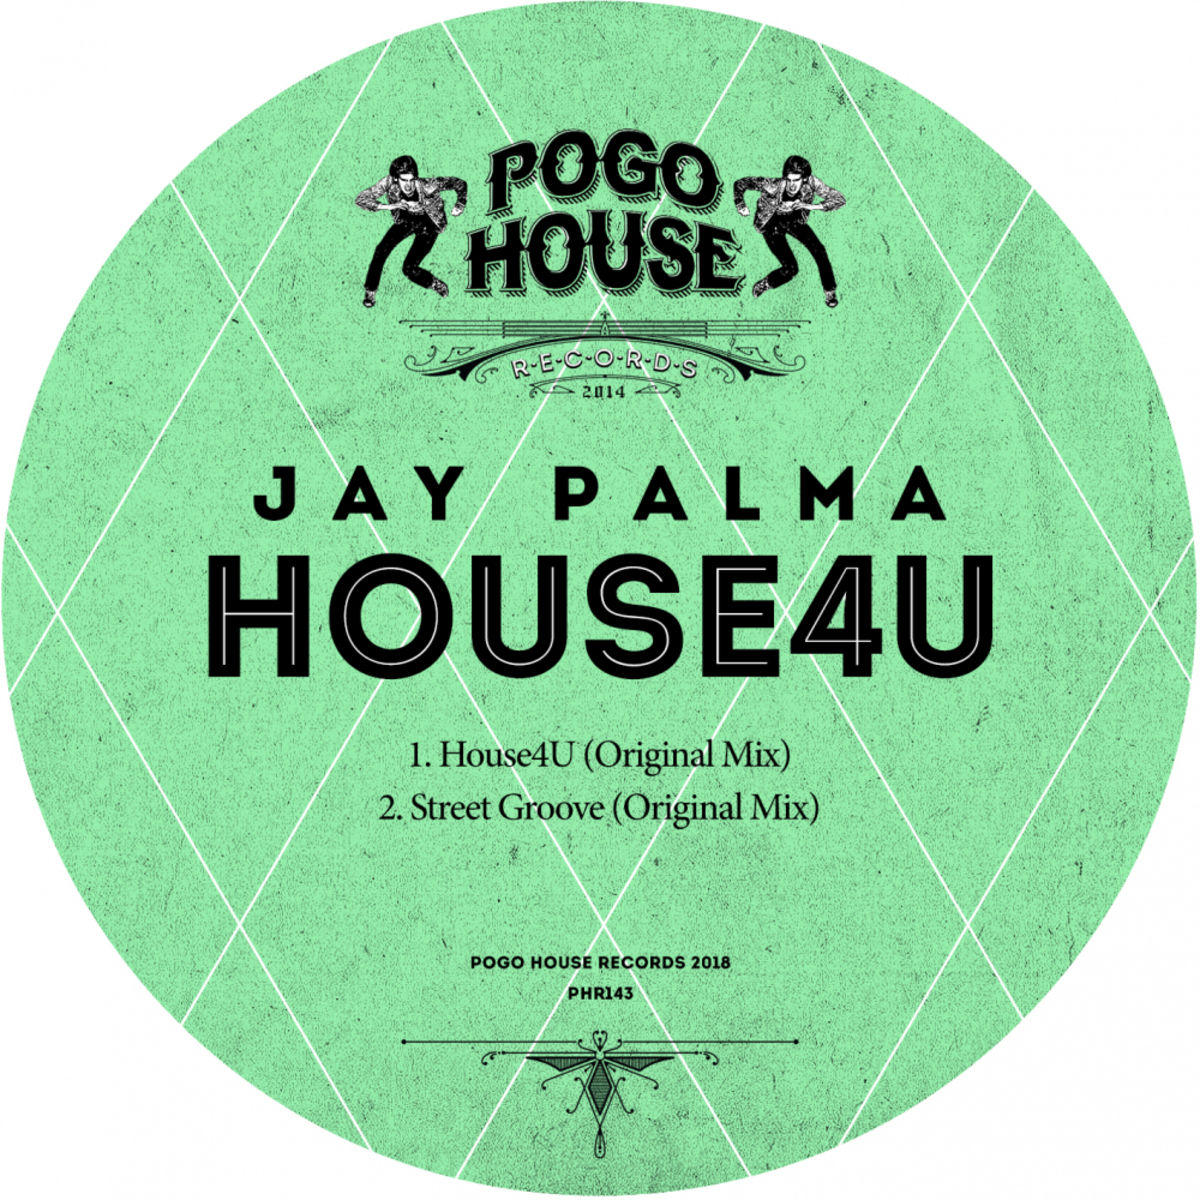 Jay Palma - House4U / Pogo House Records